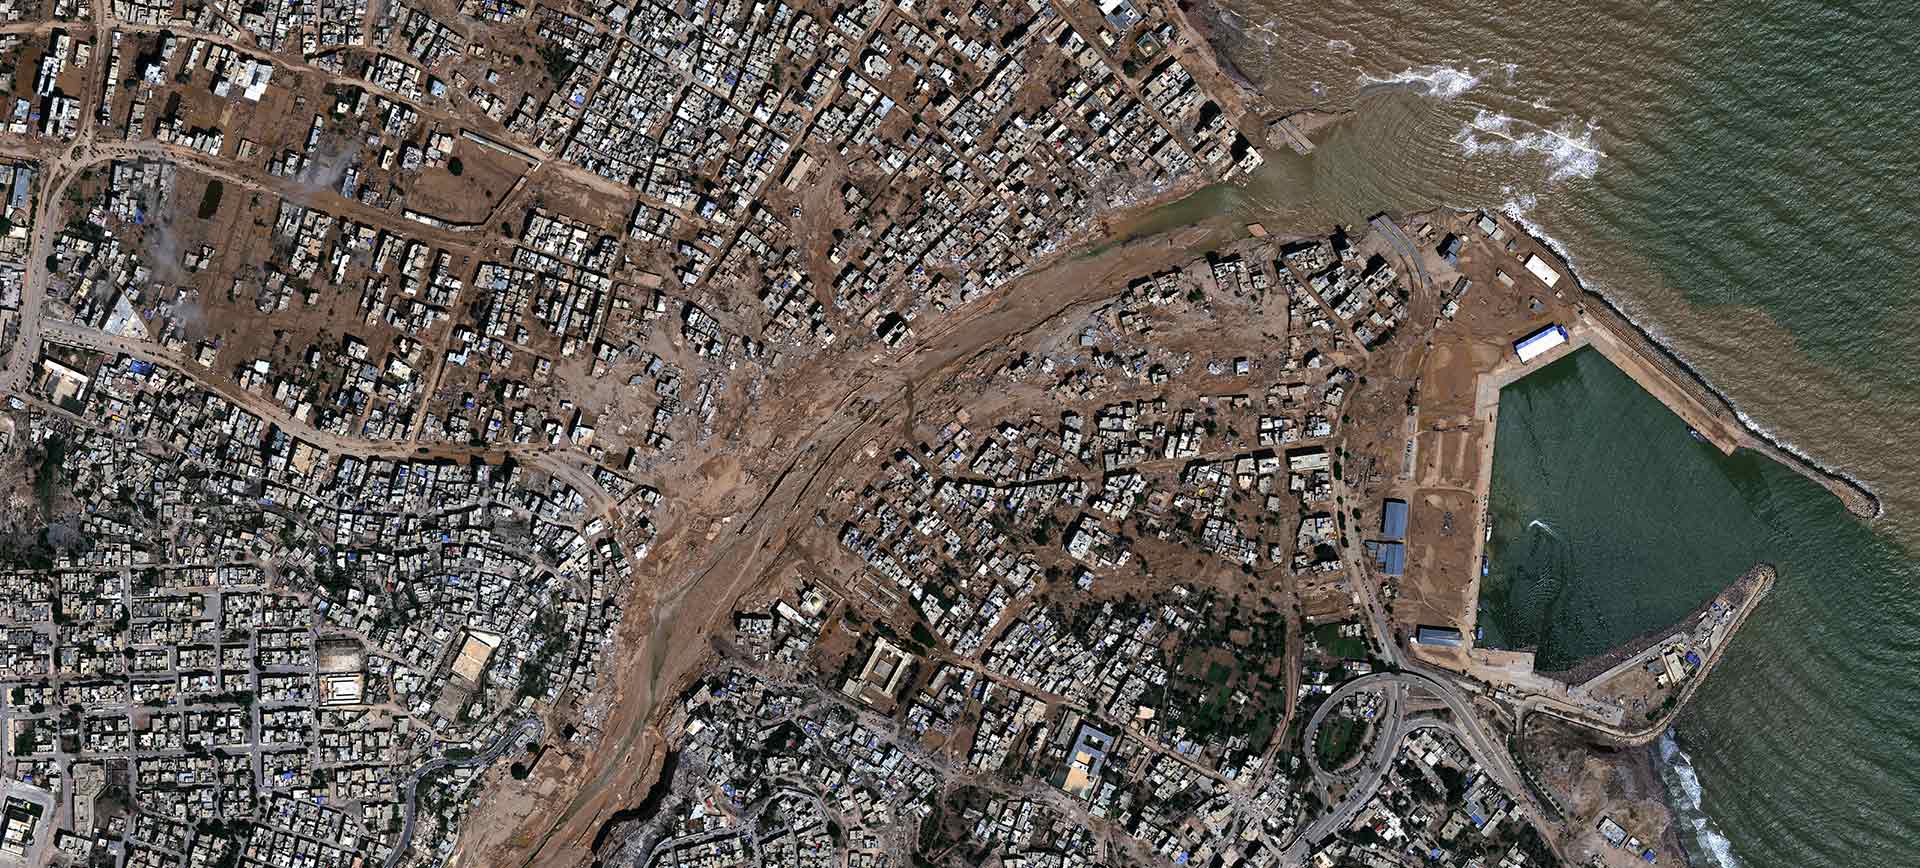 Pléiades Neo image Satellite -  Derna, Lybia after the floods - 30cm resolution